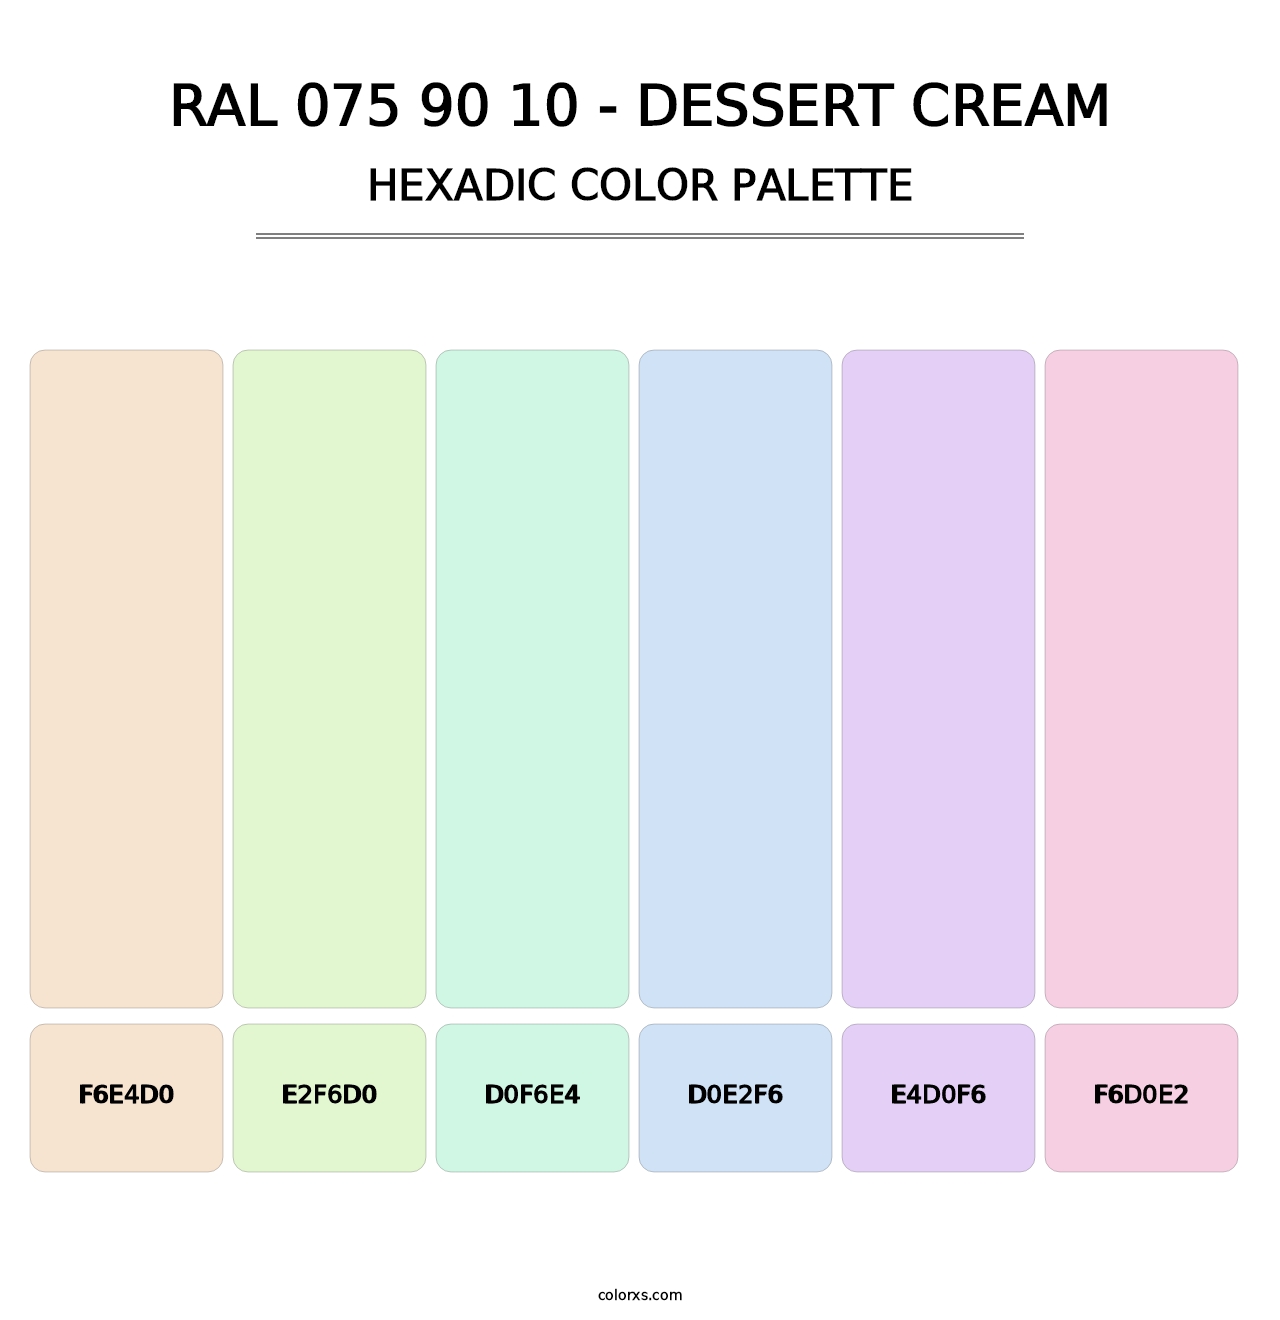 RAL 075 90 10 - Dessert Cream - Hexadic Color Palette